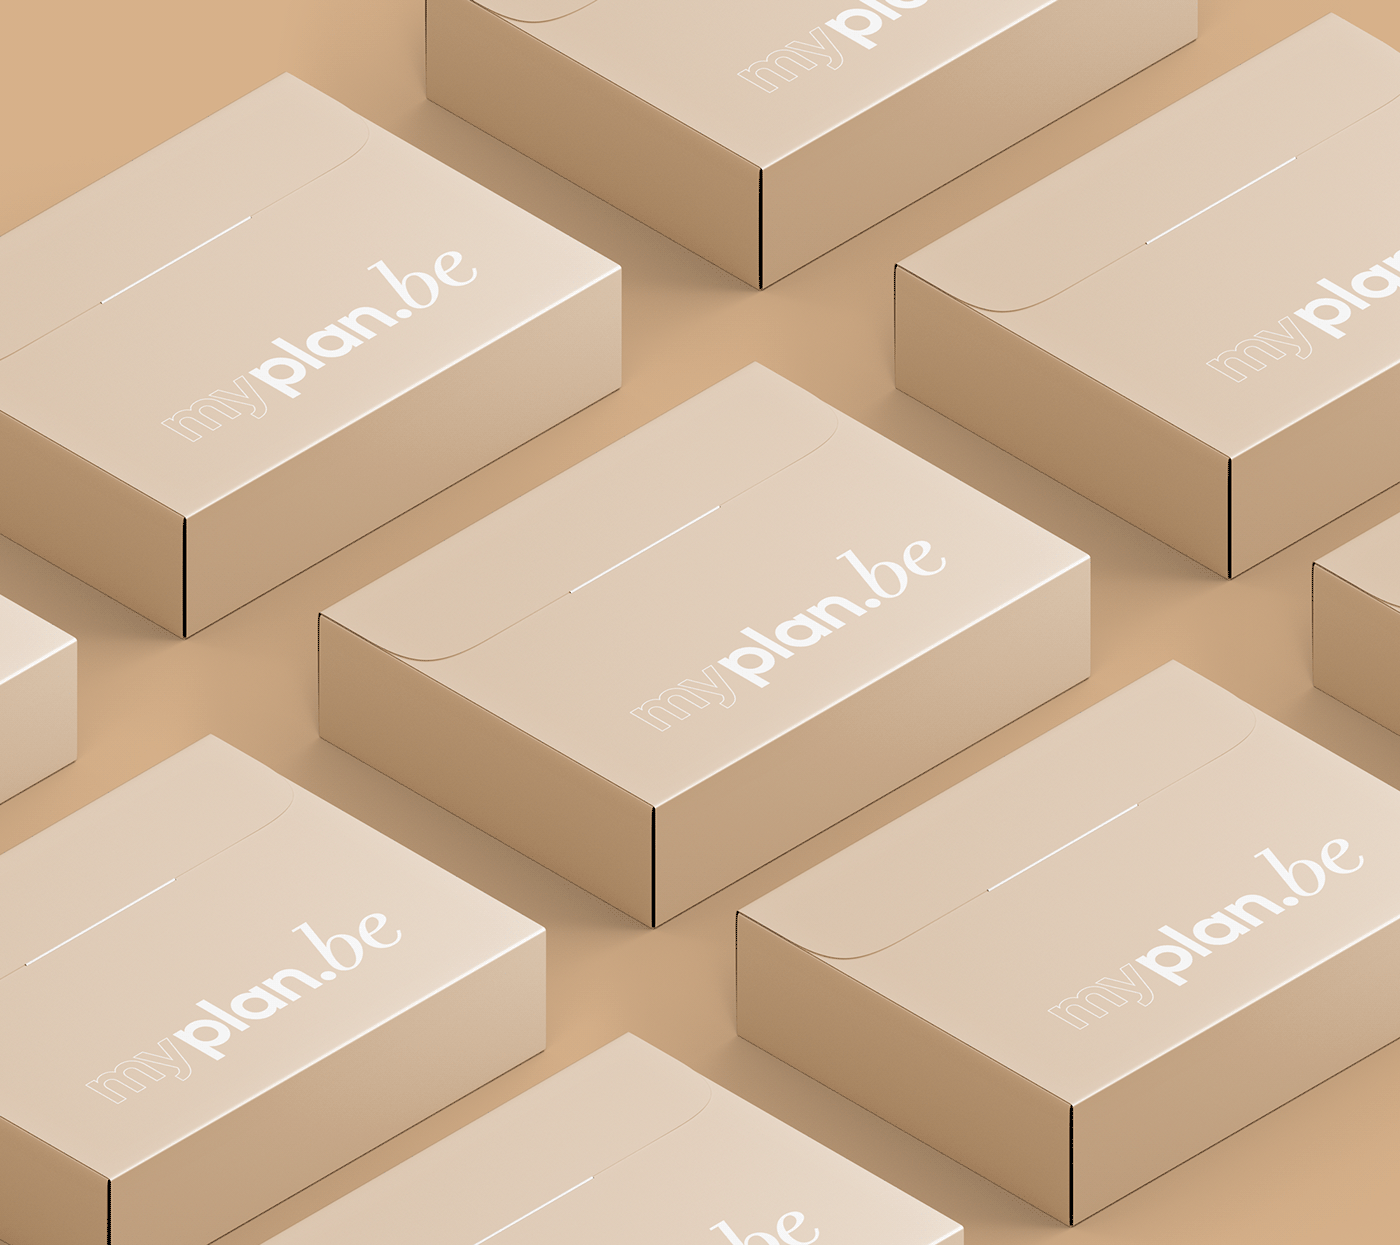 skincare brand identity visual identity packaging design Packging Logo Design